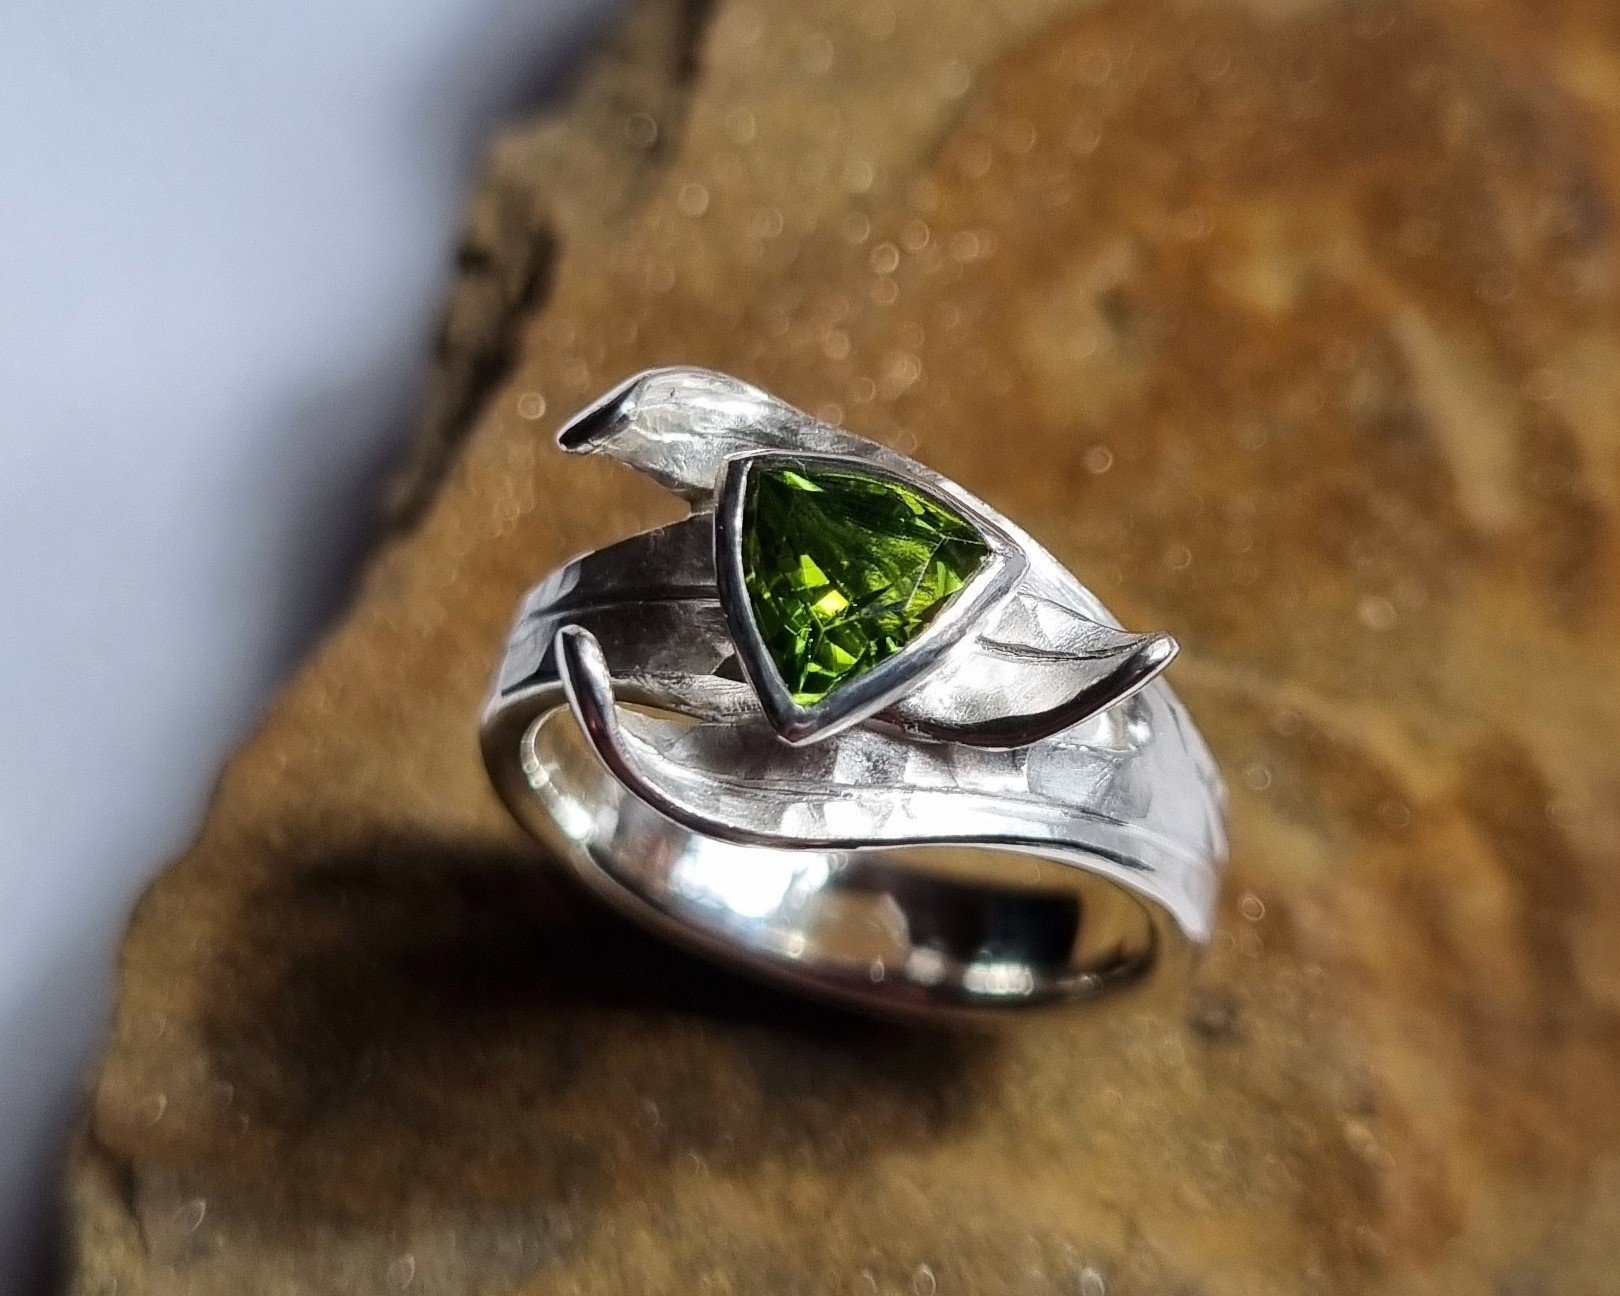 silver and tourmaline ring. green tourmaline ring.jpeg